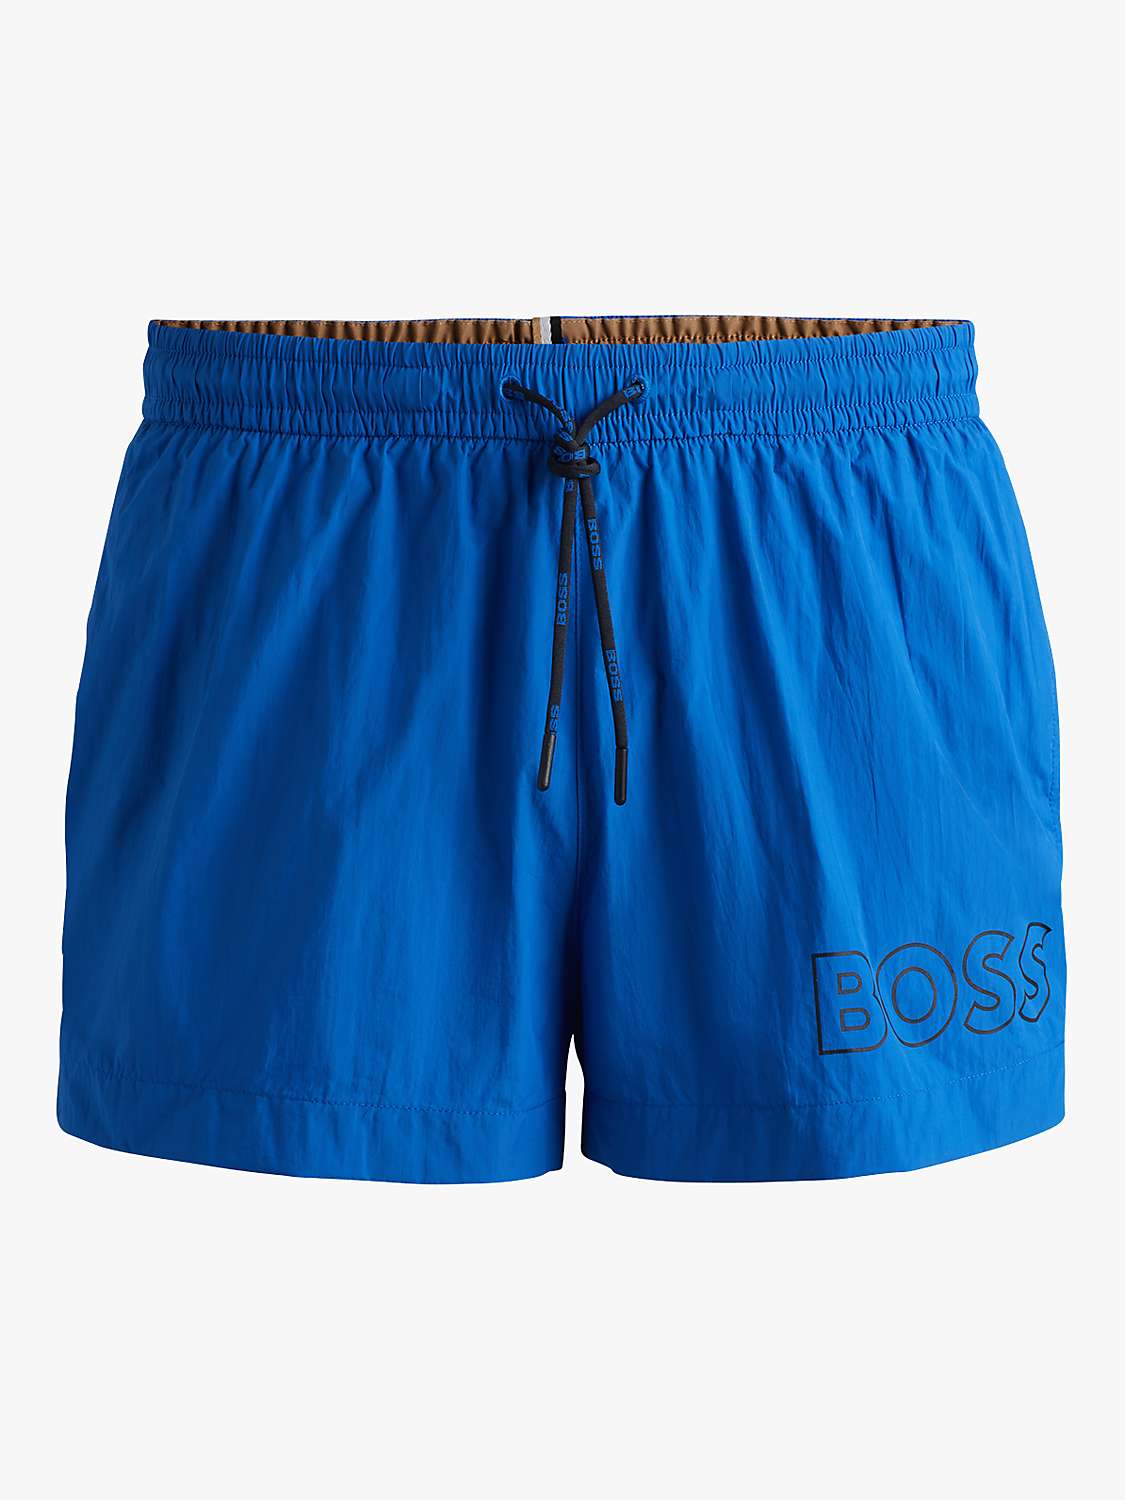 Buy BOSS Mooneye 423 Swim Shorts, Blue Online at johnlewis.com